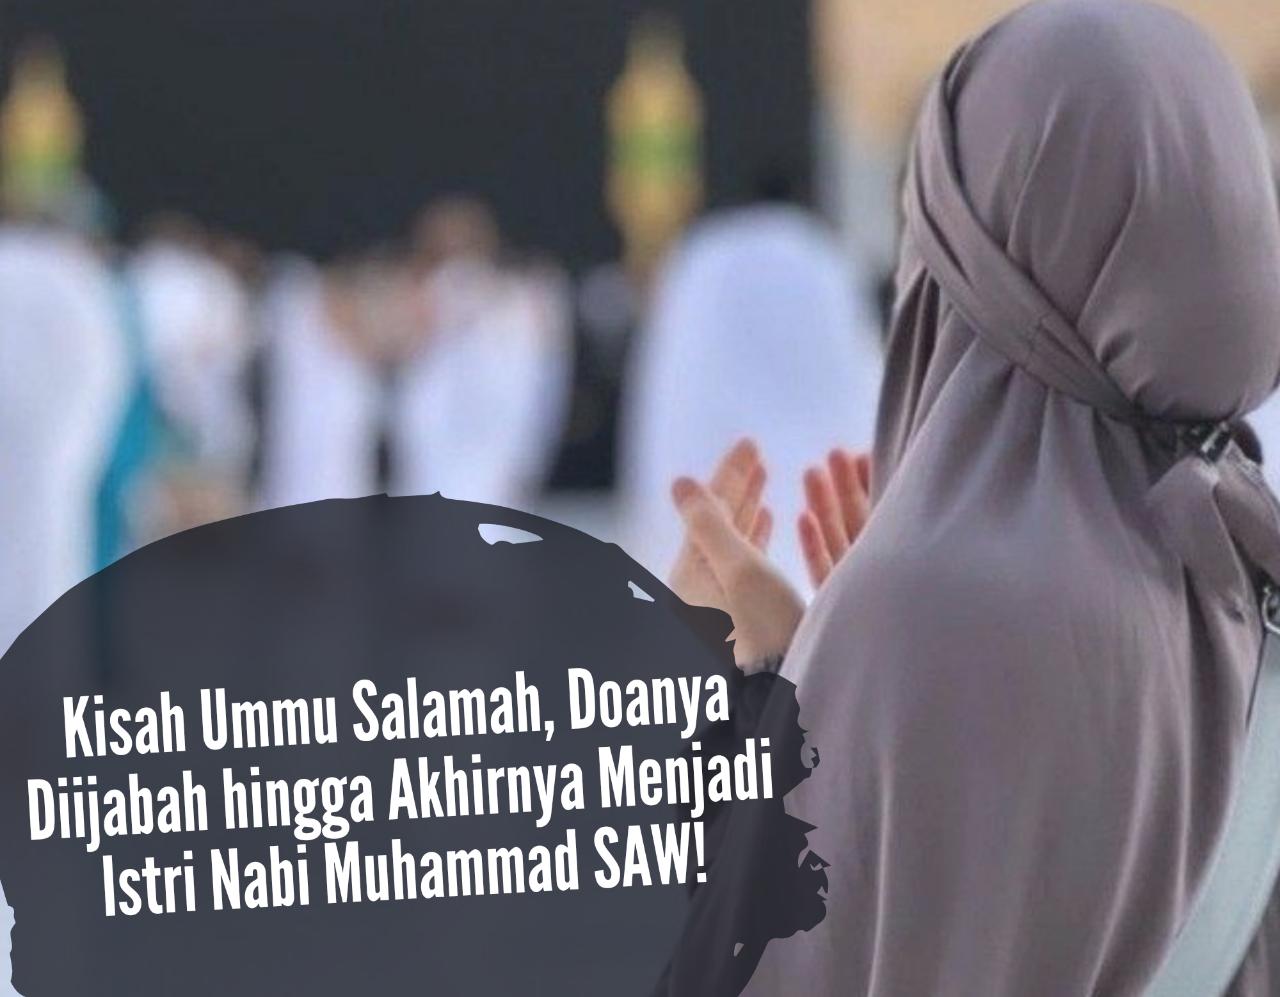 Kisah Ummu Salamah, Doanya Diijabah hingga Akhirnya Menjadi Istri Nabi Muhammad SAW, Siapakah Beliau?